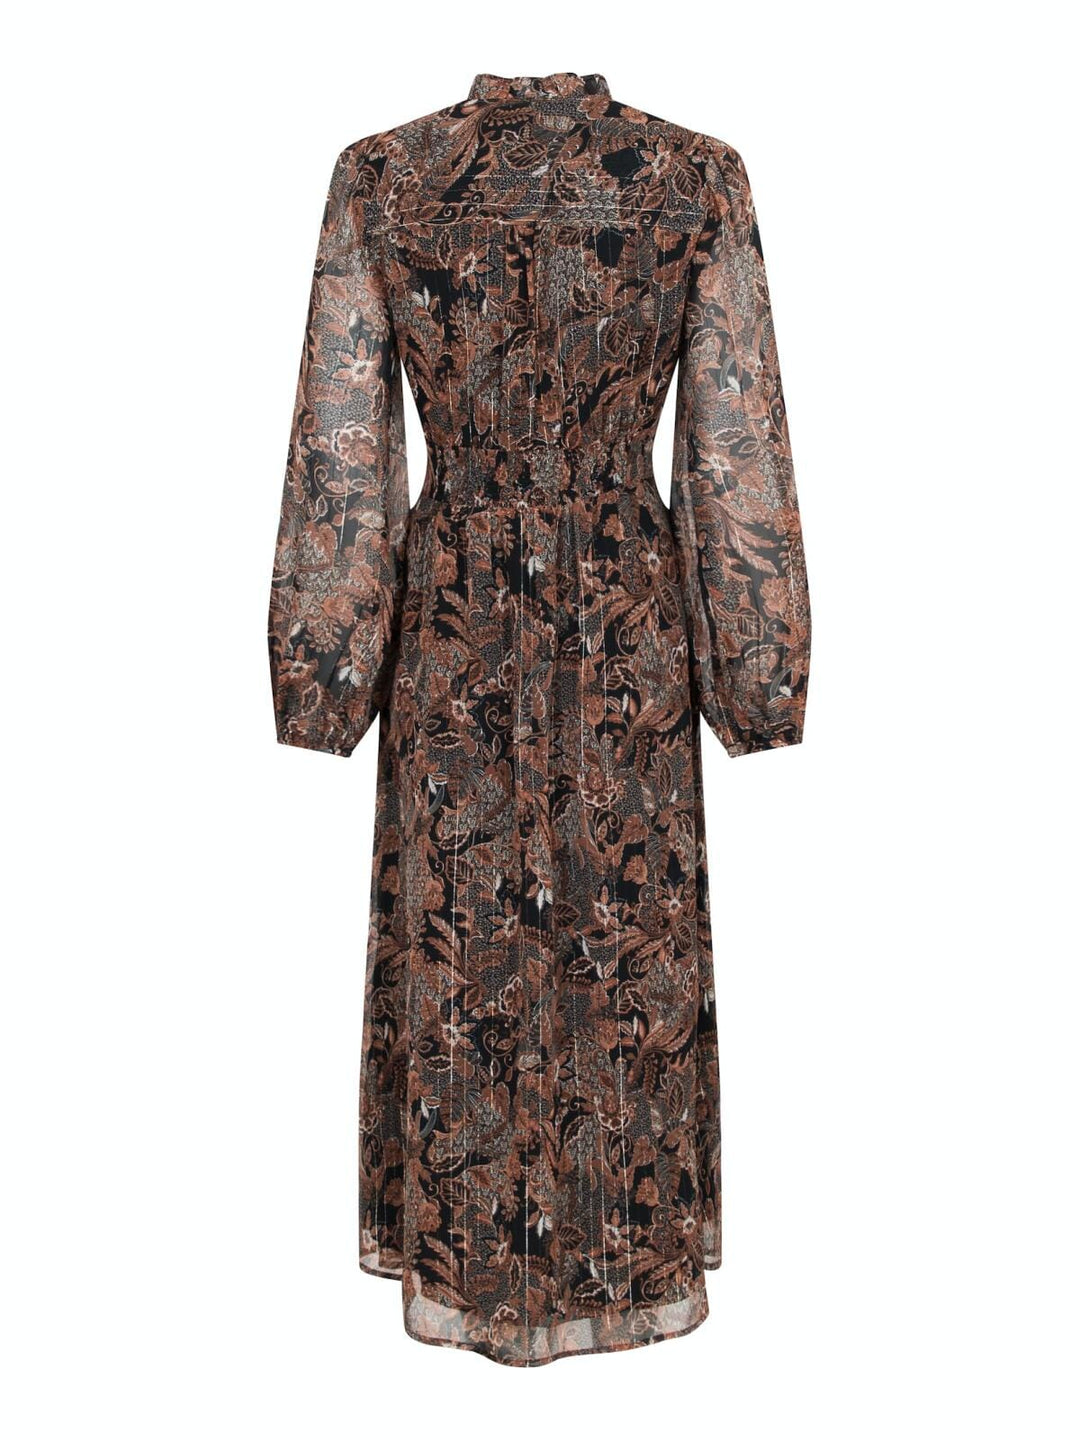 Neo Noir - Nimes Forest Field Dress - Copper Brown Kjoler 